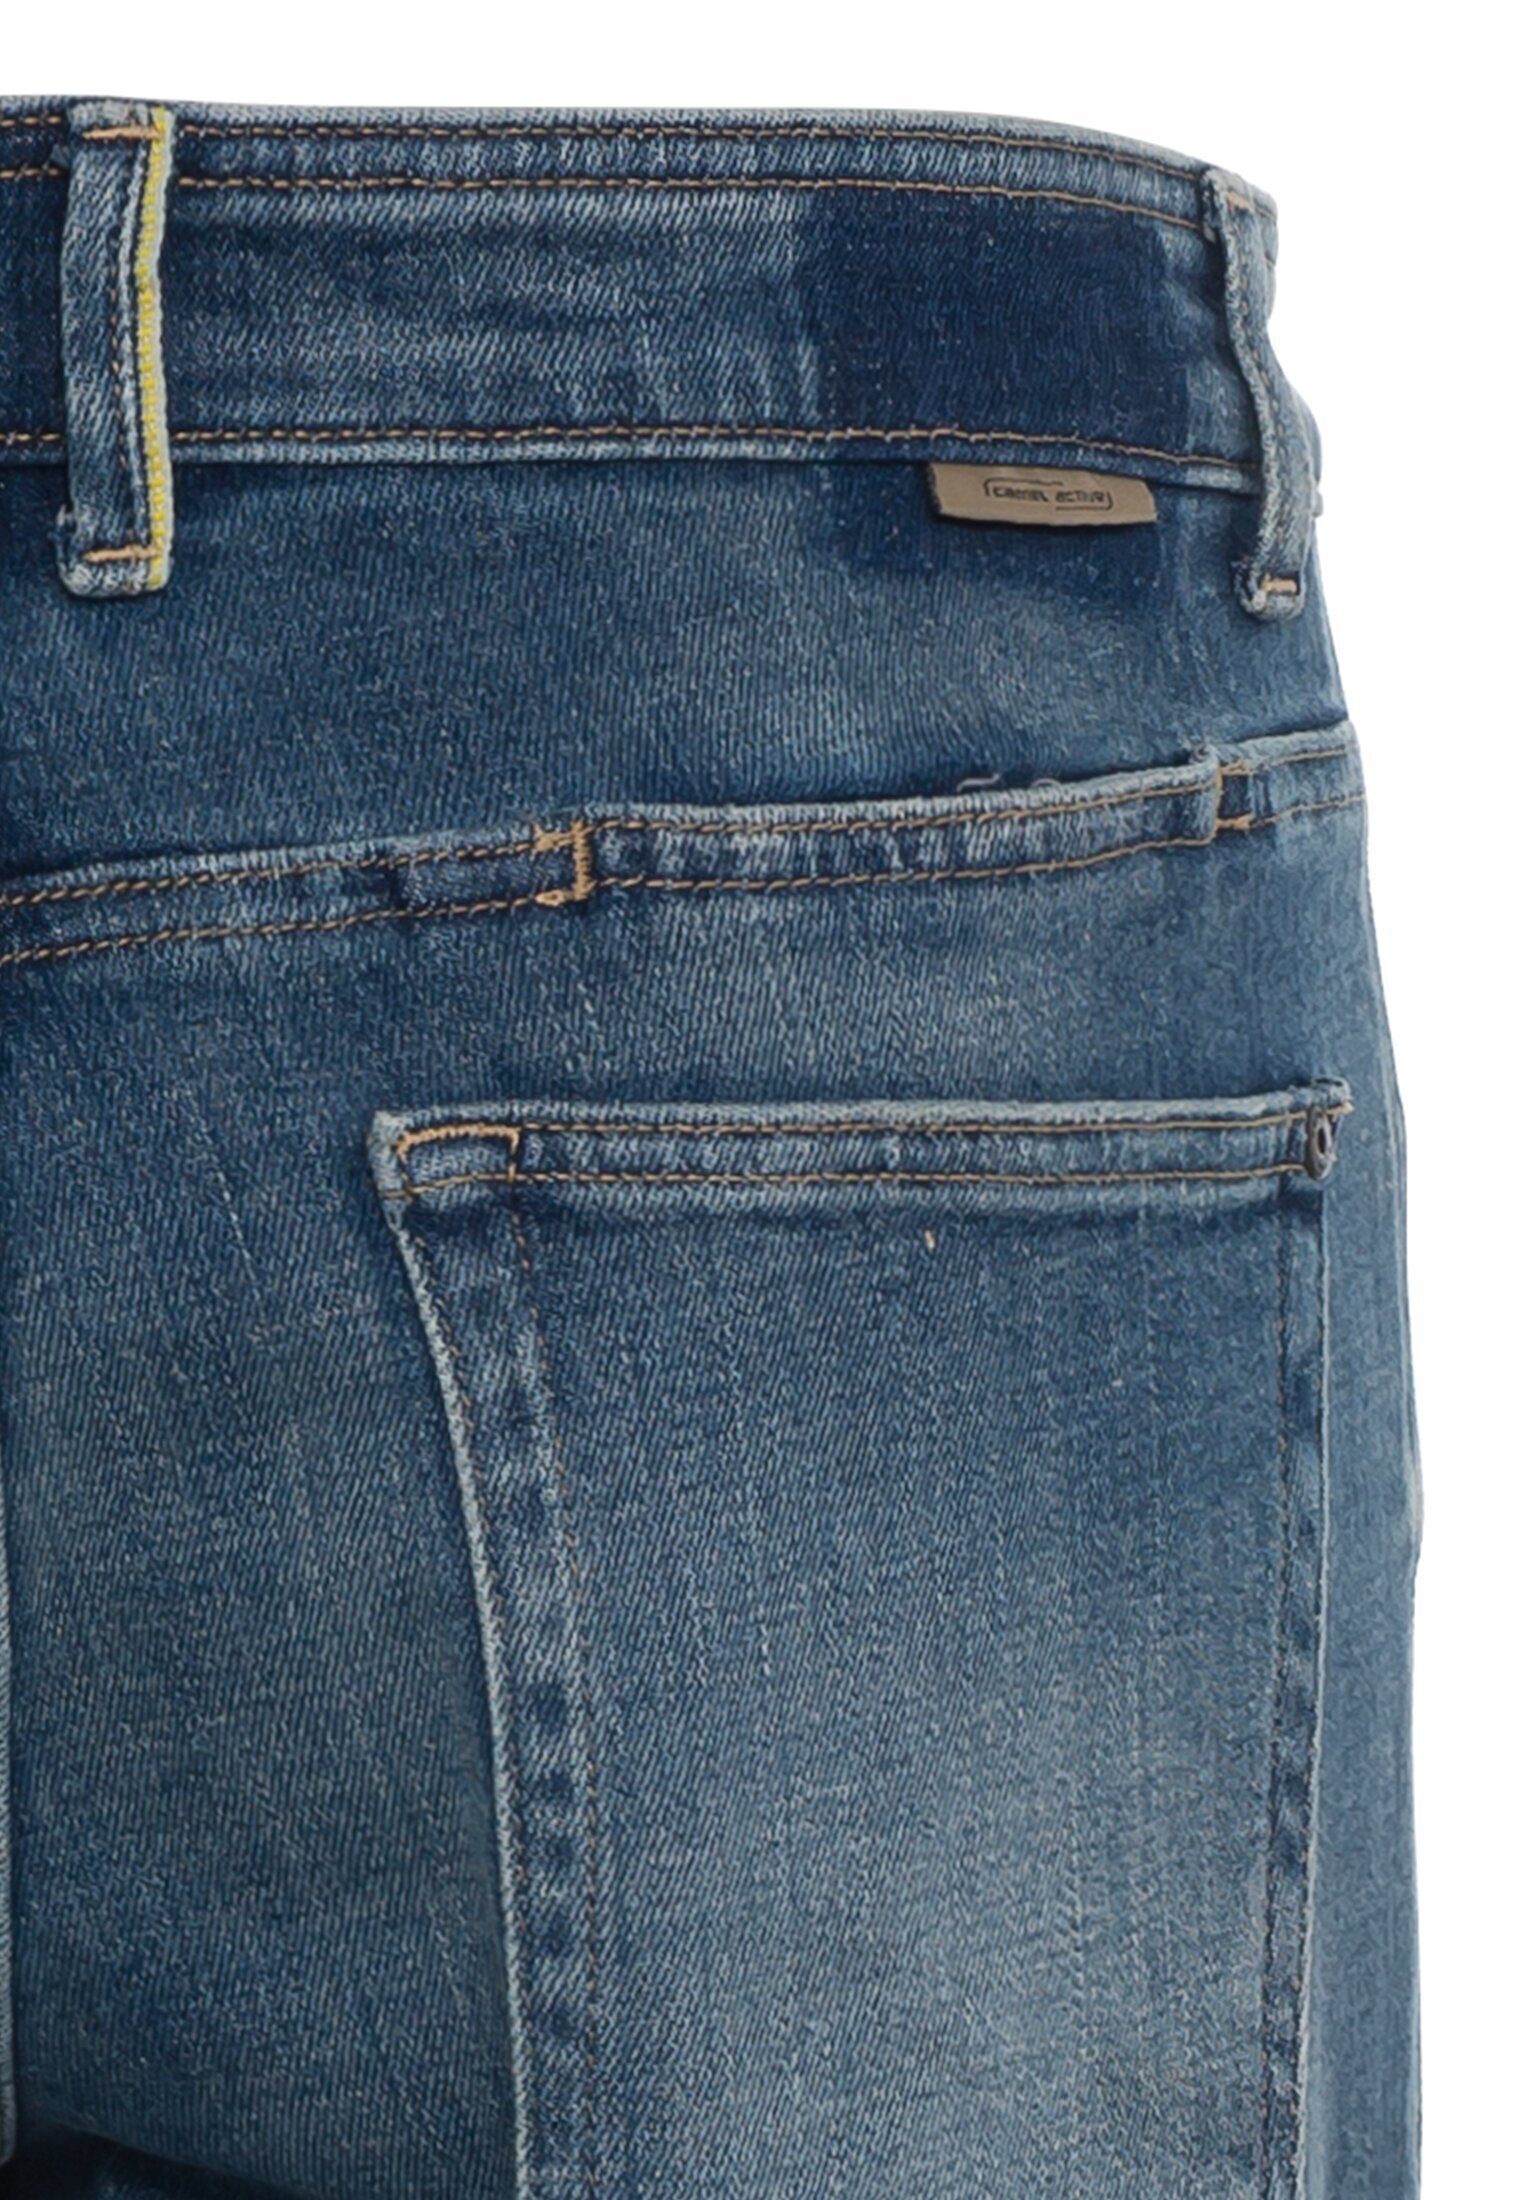 mit Fit 5-Pocket-Jeans Tapered camel Jeans Smartphone Tasche active